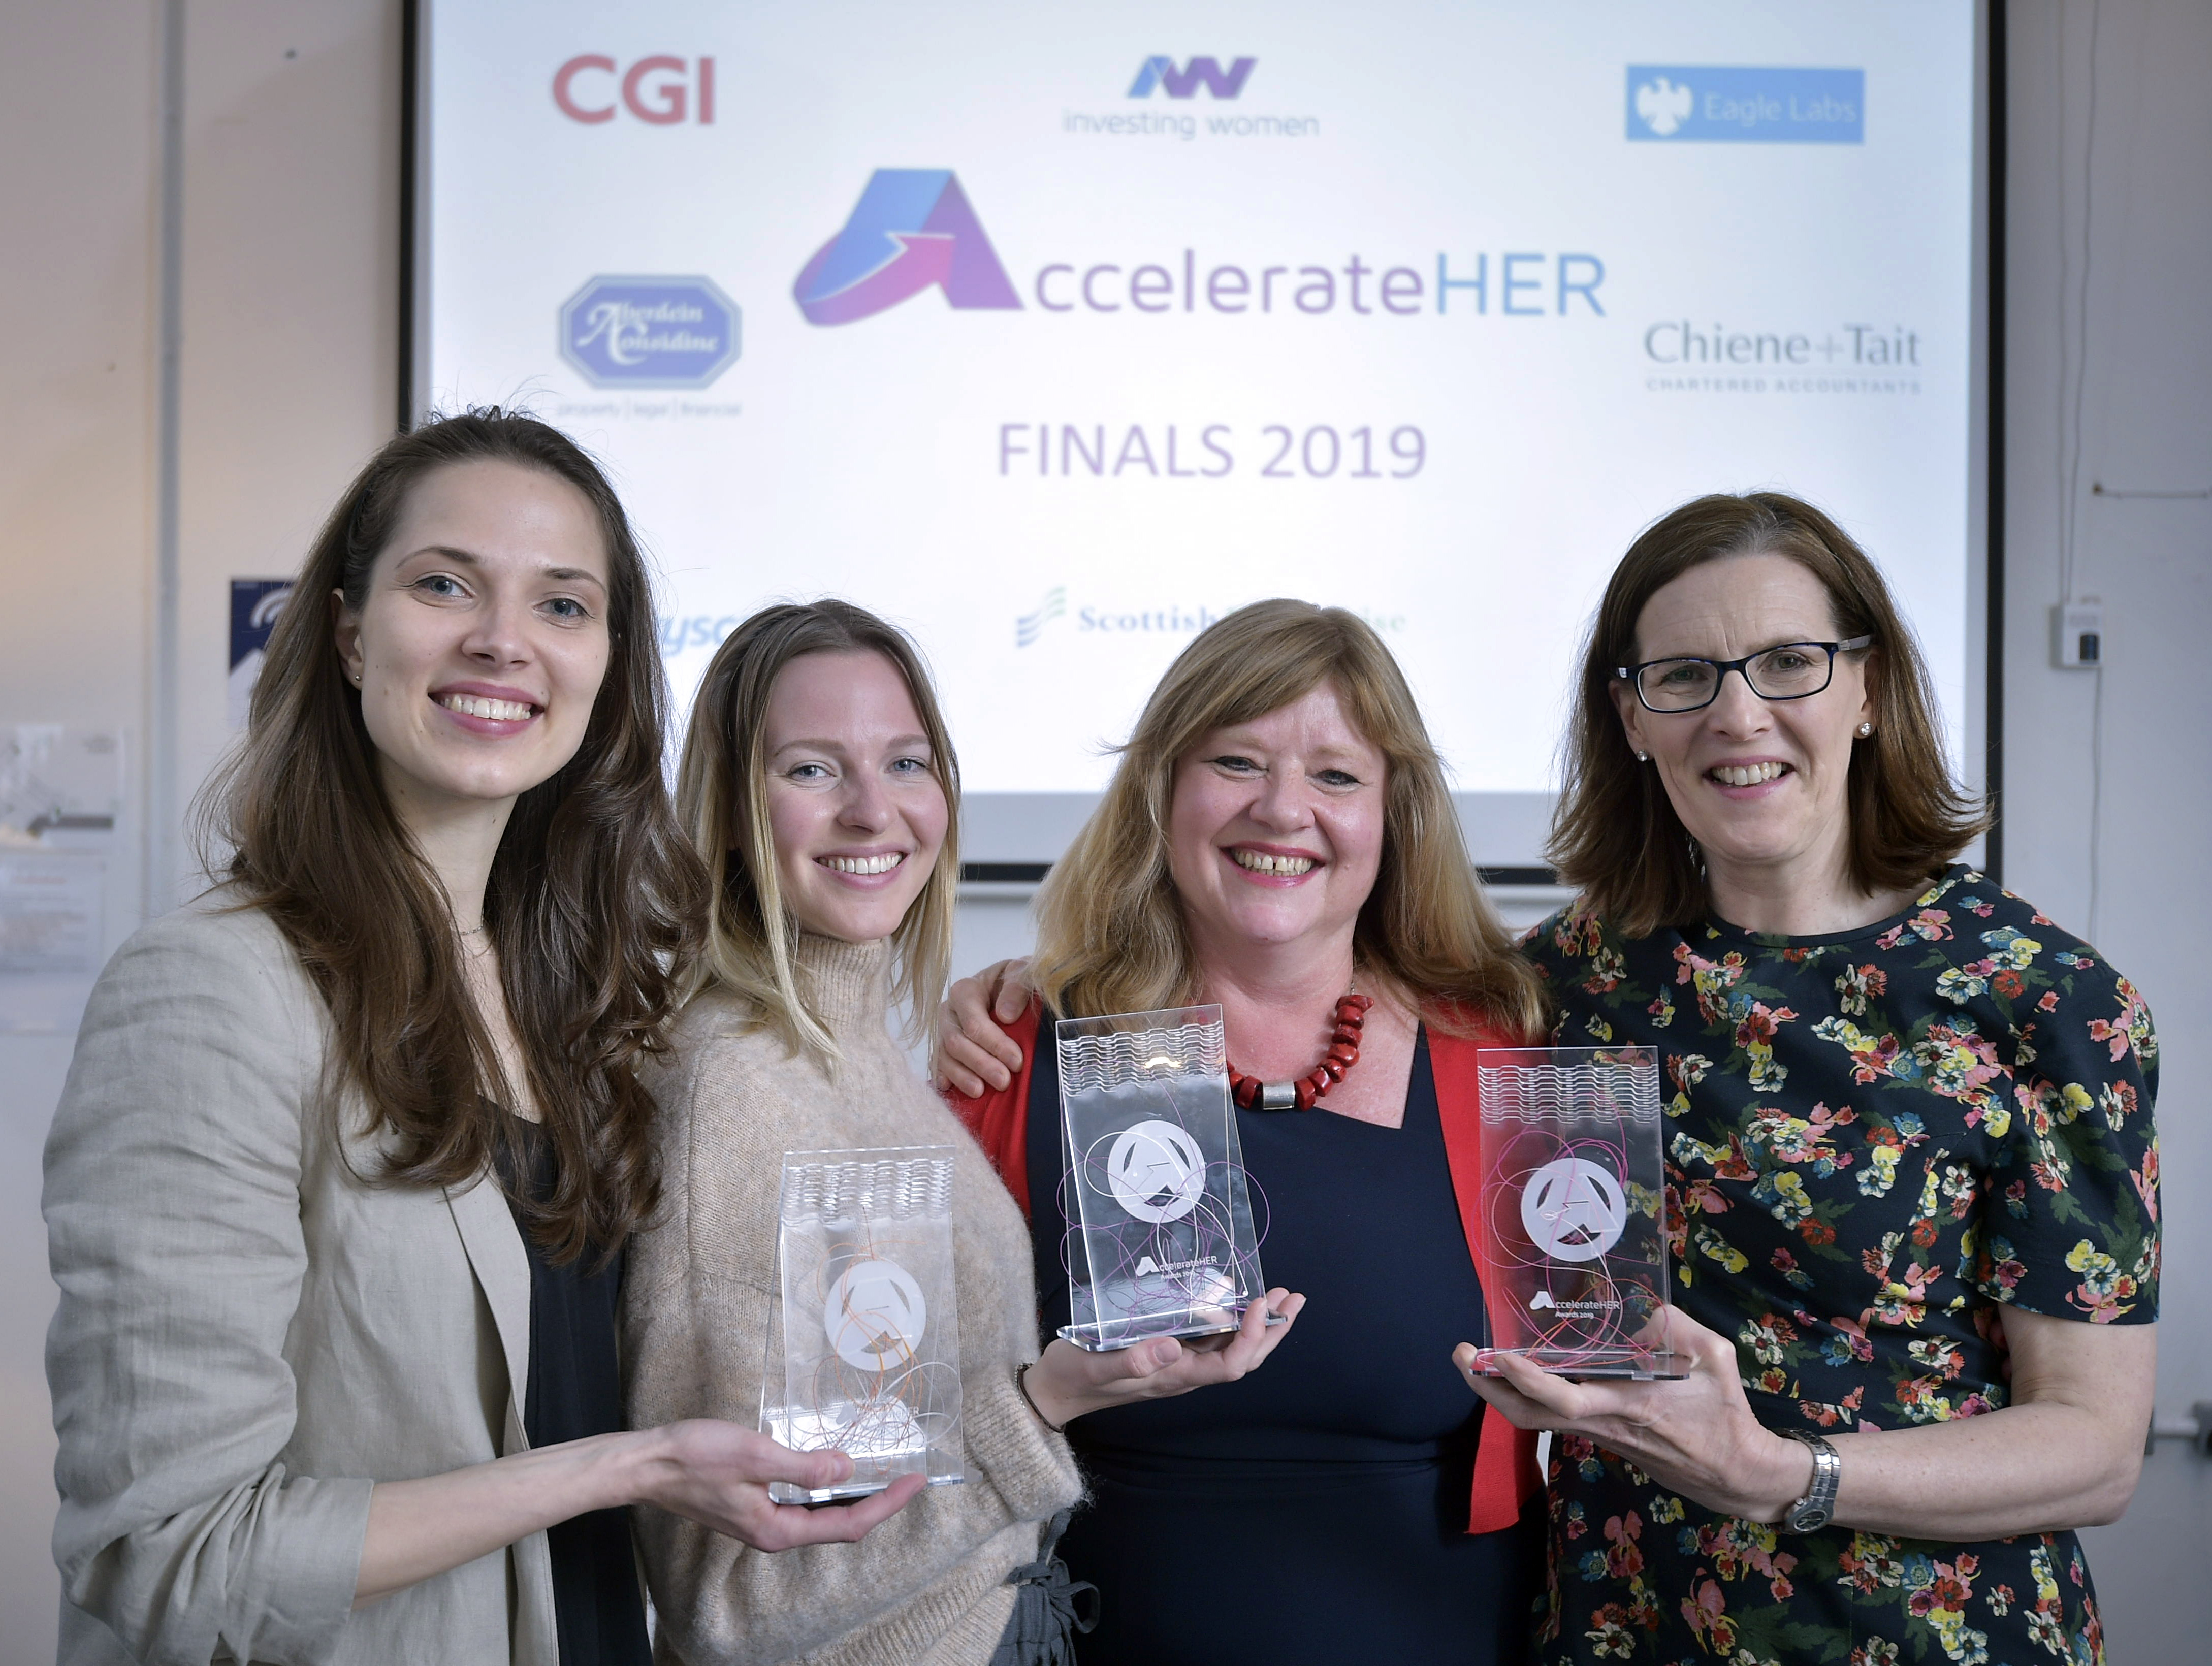 2020 AccelerateHER Awards target Scotland’s aspiring female entrepreneurs